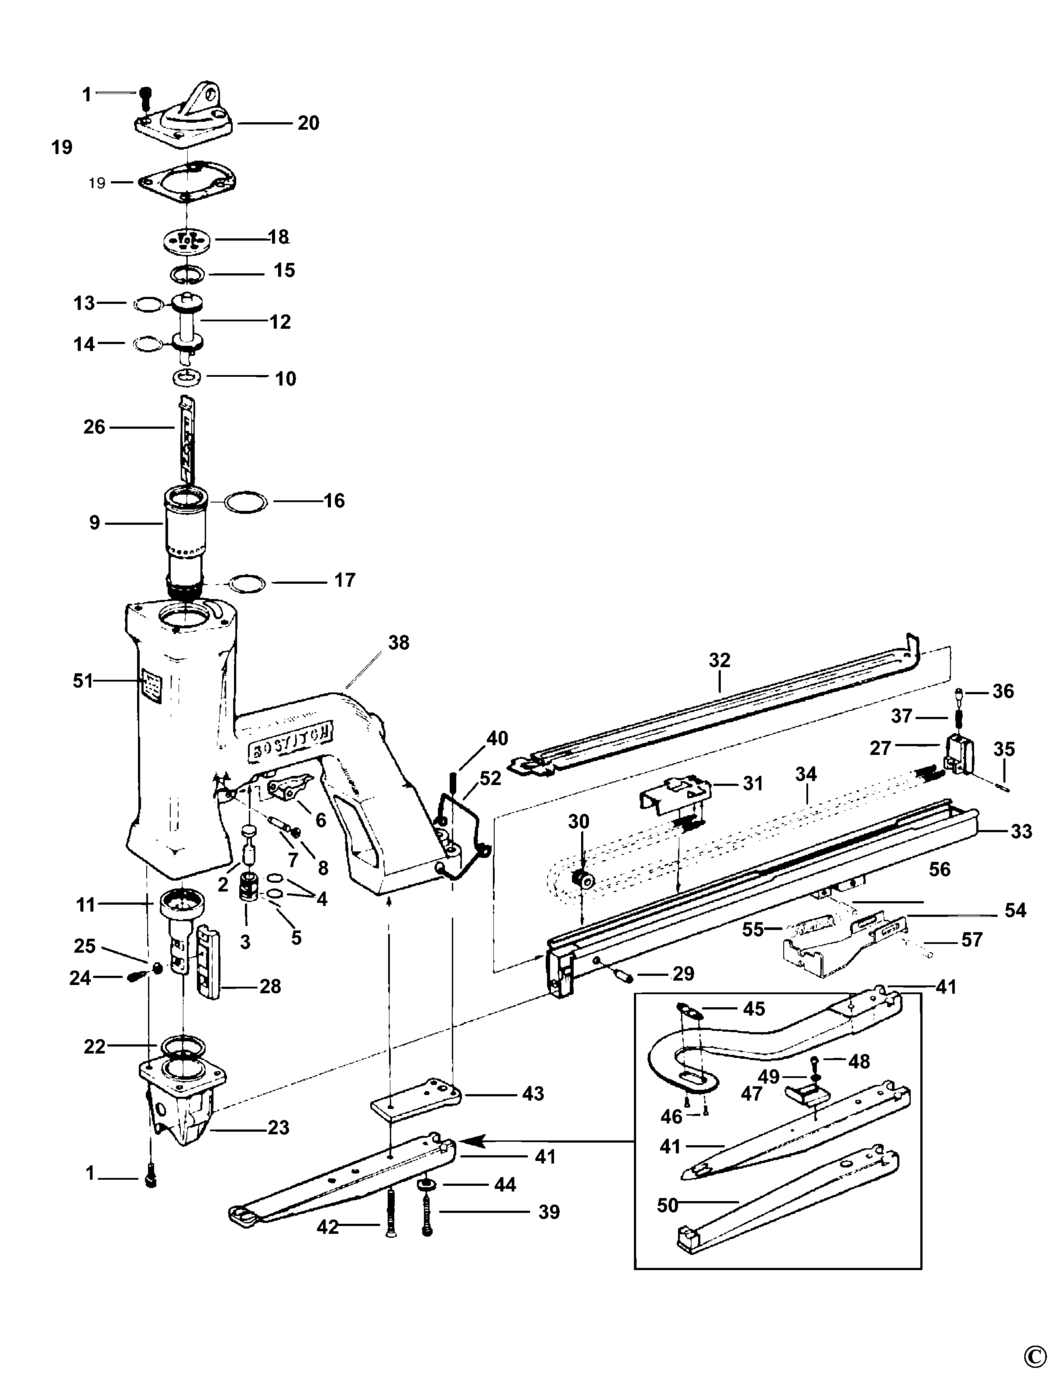 Bostitch P50-10B Type REV 0 Stapler Spare Parts